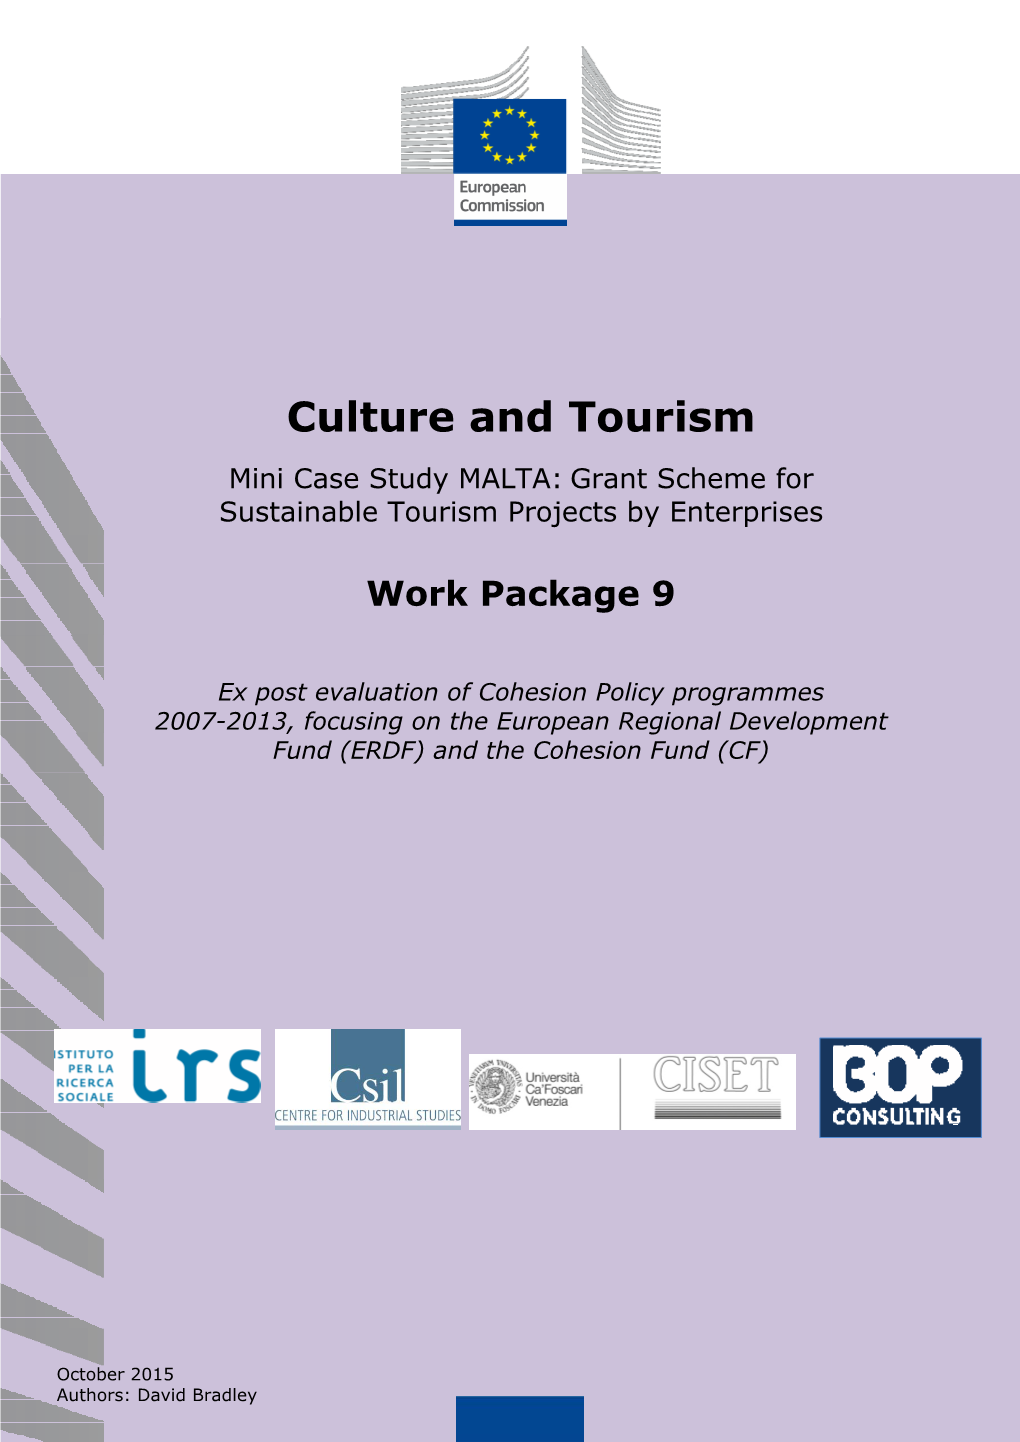 Mini Case Study MALTA: Grant Scheme for Sustainable Tourism Projects by Enterprises